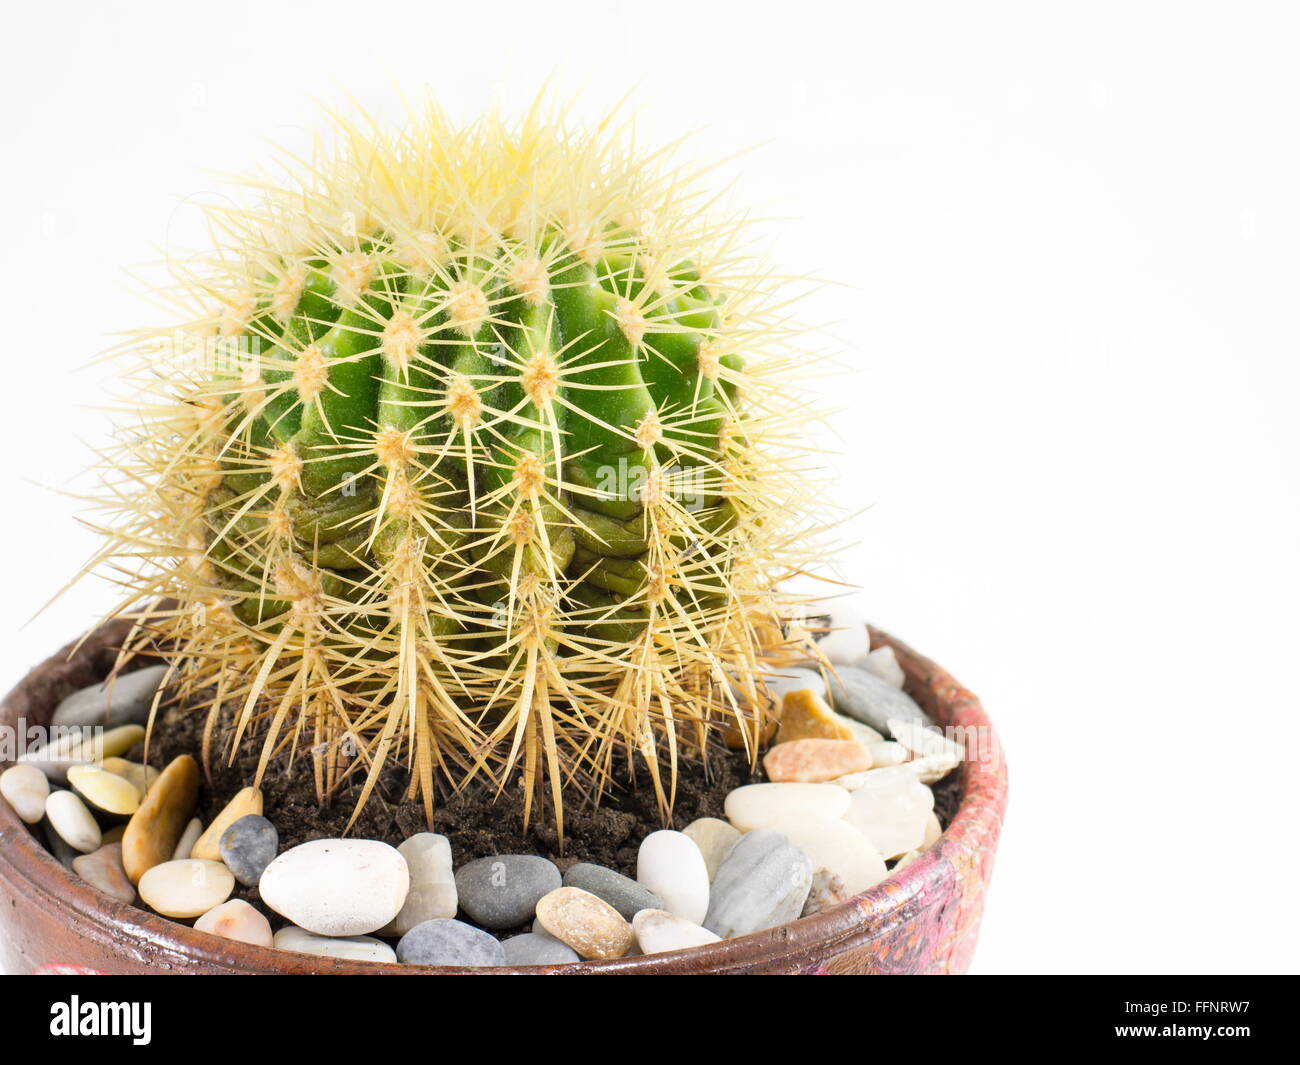 Kaktus in einen Topf mit Steinen hautnah Stockfoto